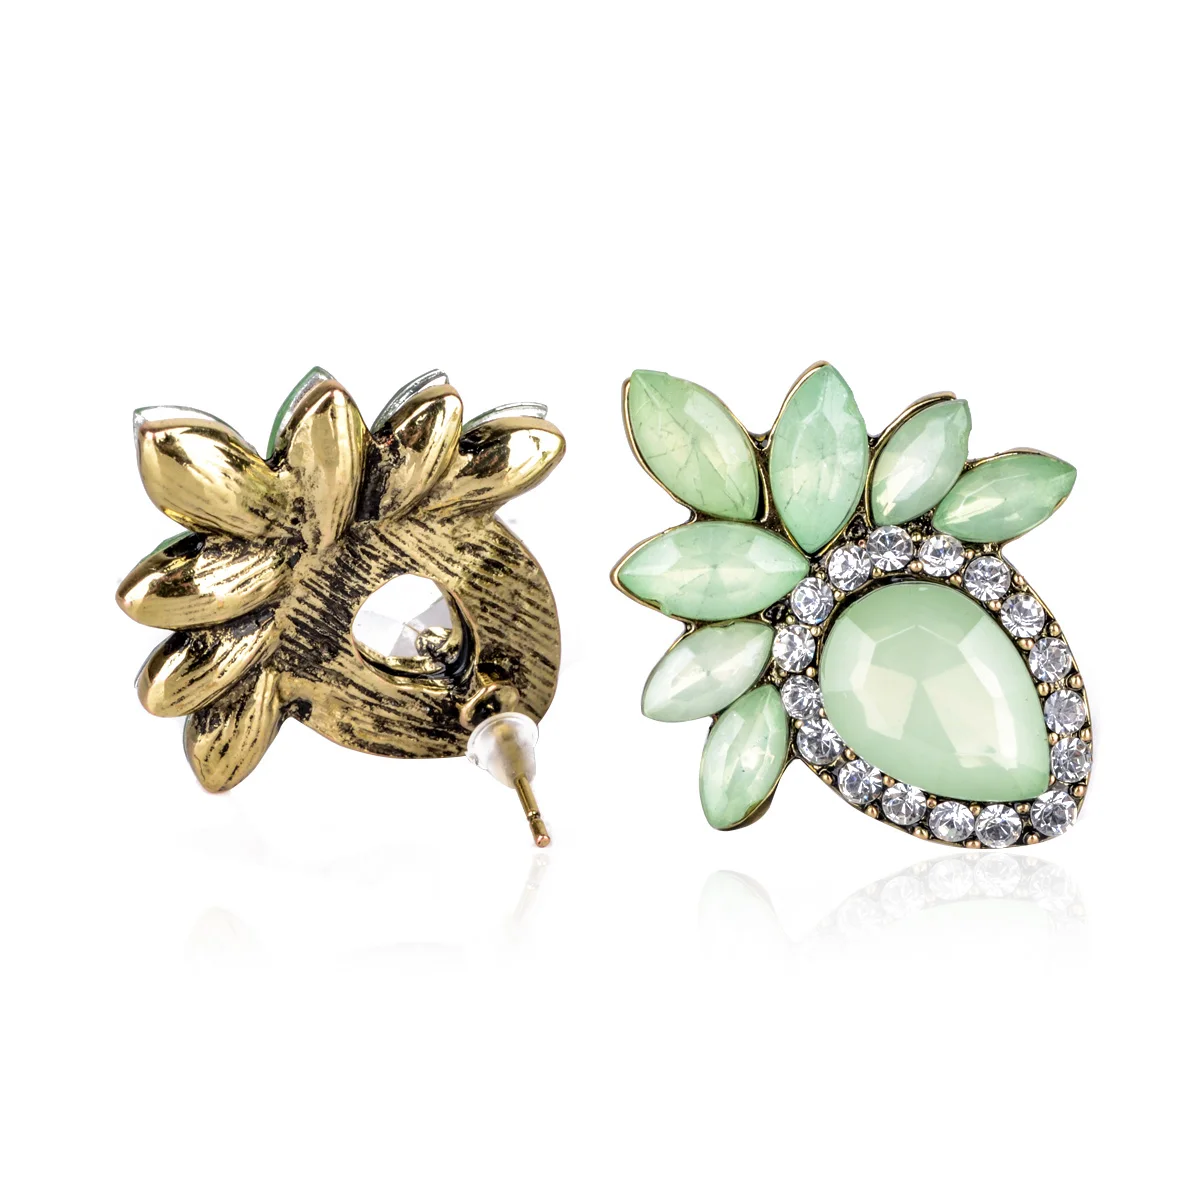 Shellhard Luxury Rhinestone Crystal Stud Earrings Romantic Fashion Elegant Ear Stud Charms Chic Jewelry Birthday Gifts For Women